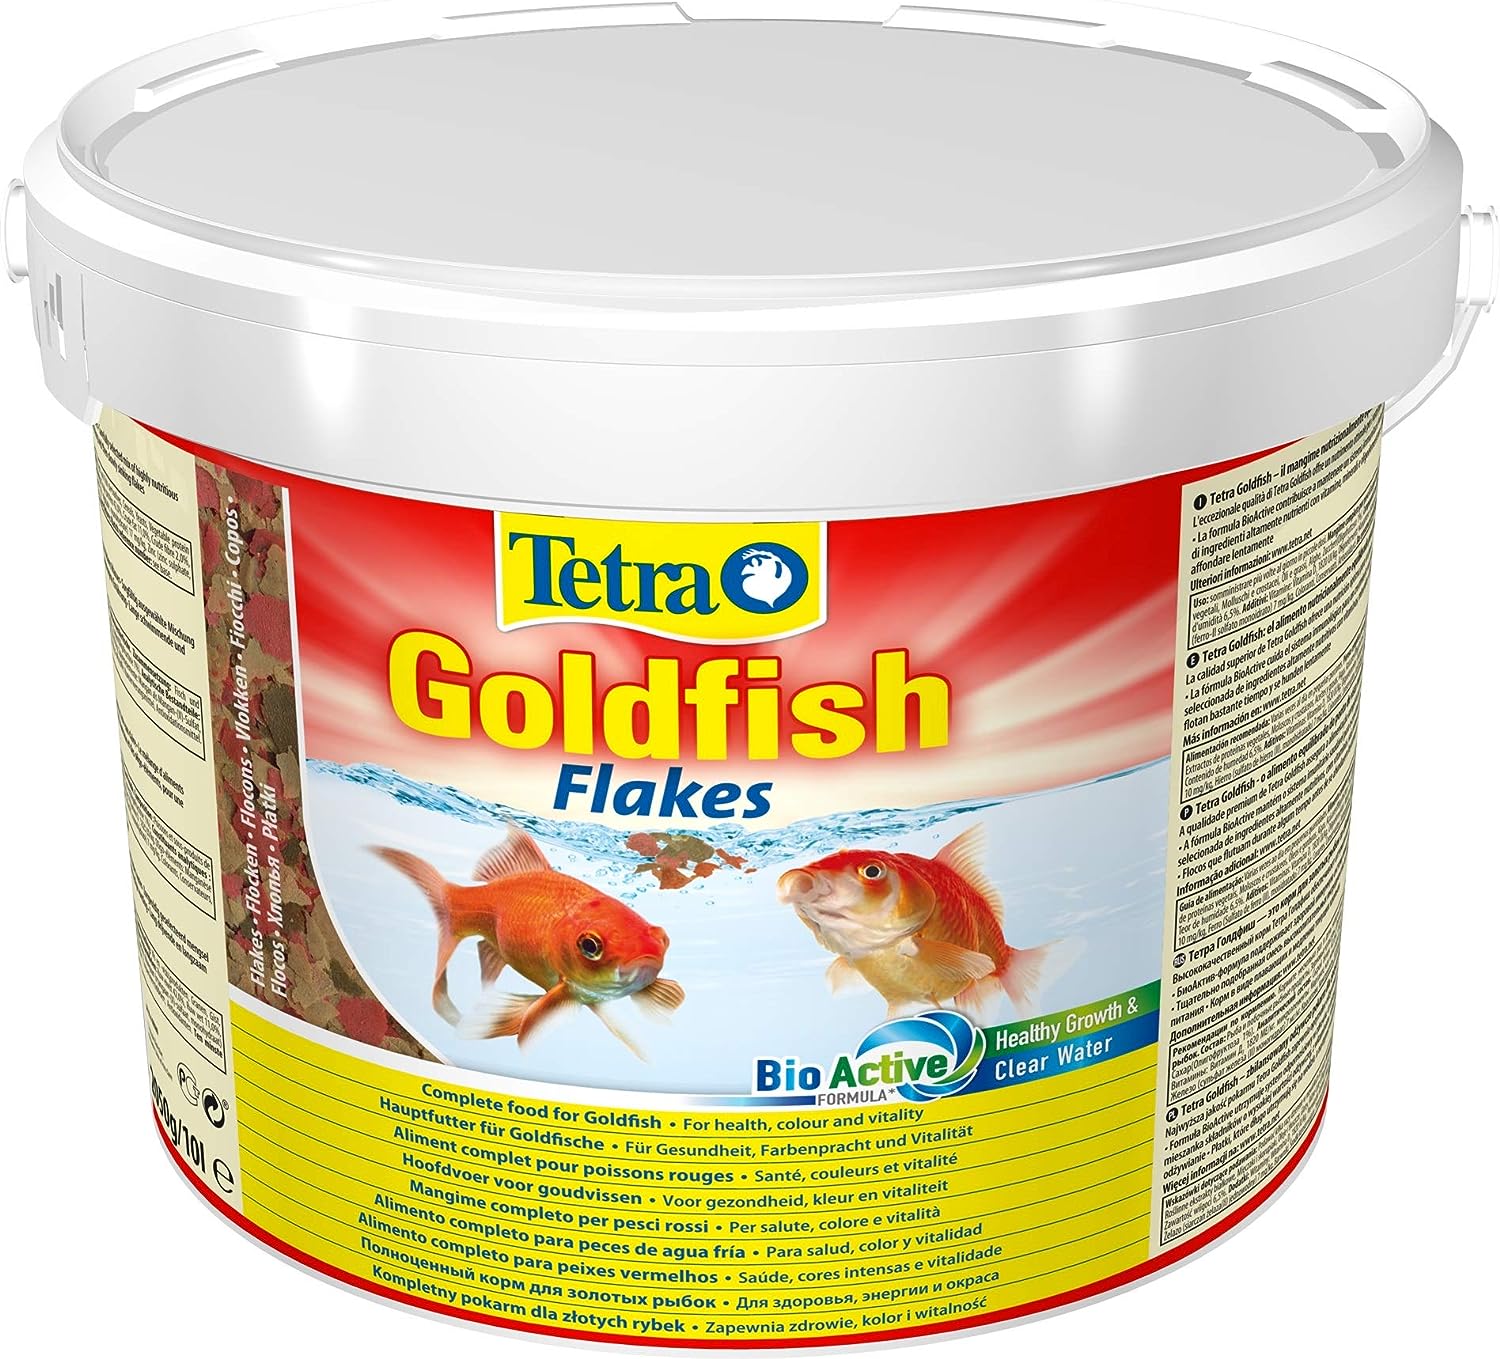 Aliment poisson rouge Goldfish TETRA